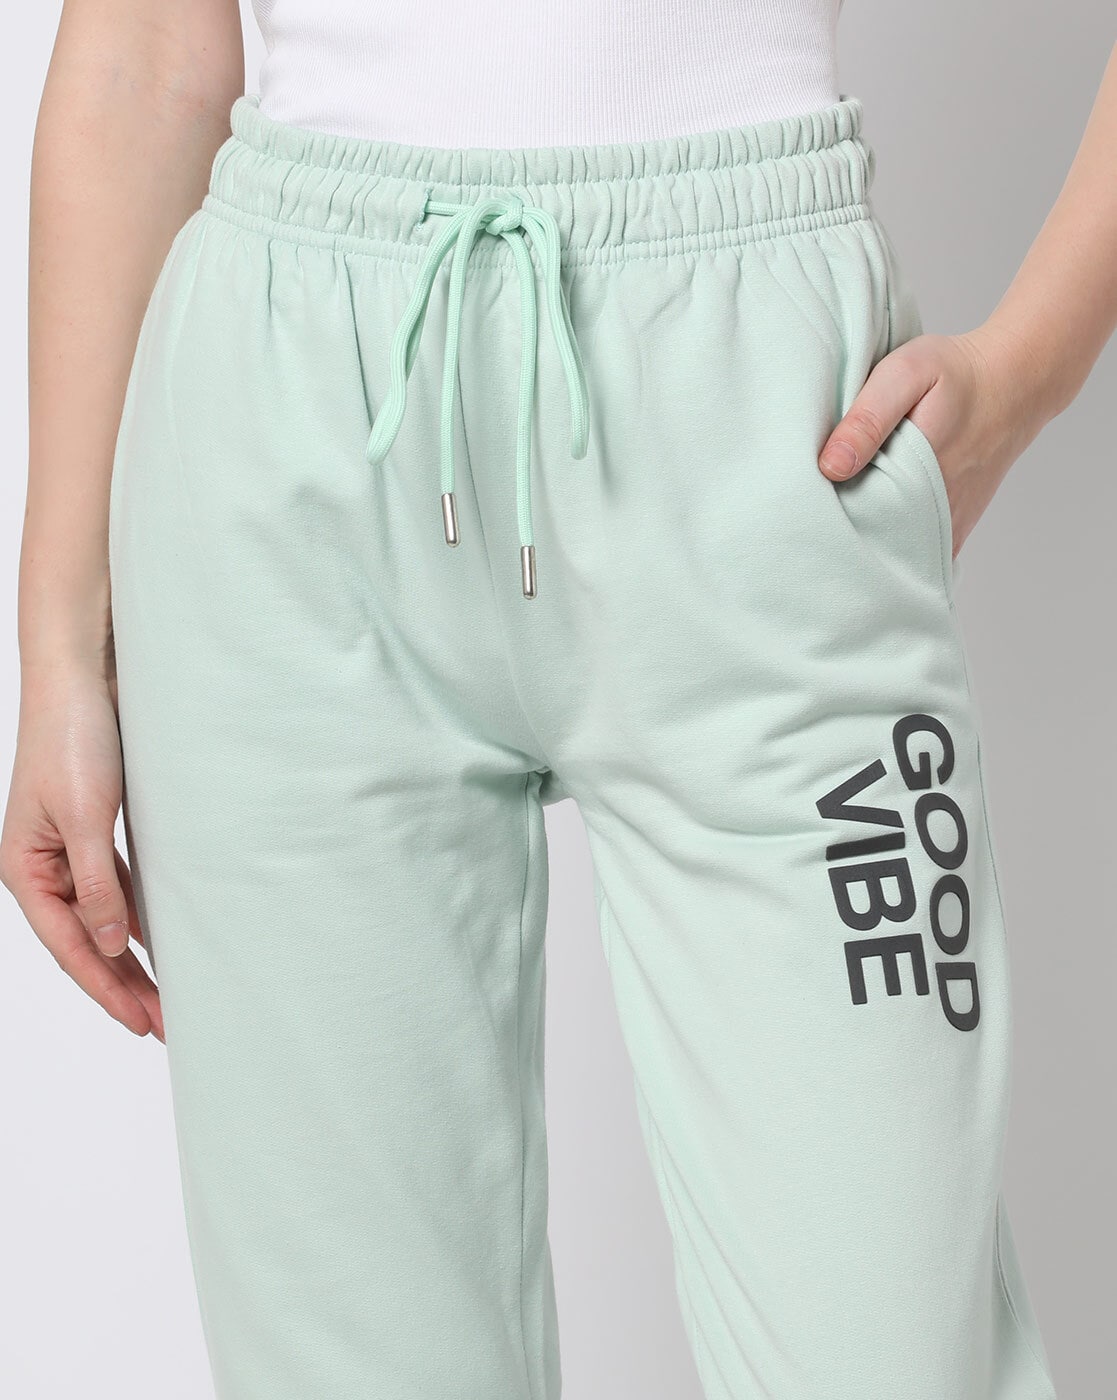 Buy Sage Track Pants for Women by Fyre Rose Online